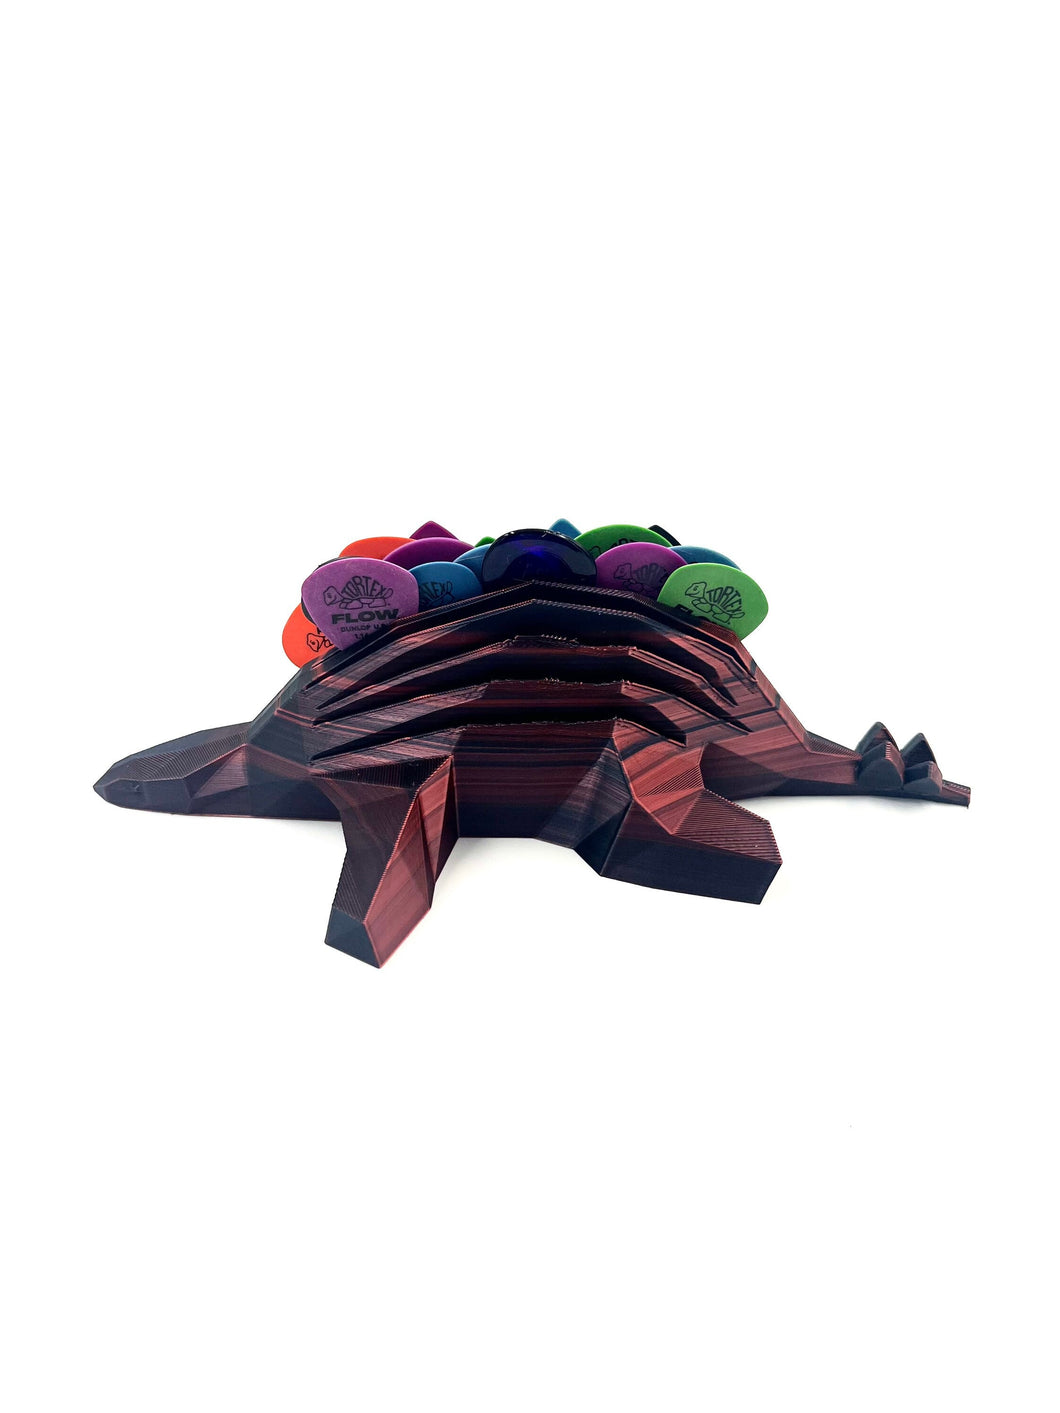 Giant Stegosaurus Guitar Pick Holder - Red/Black Color Shift Limited Edition